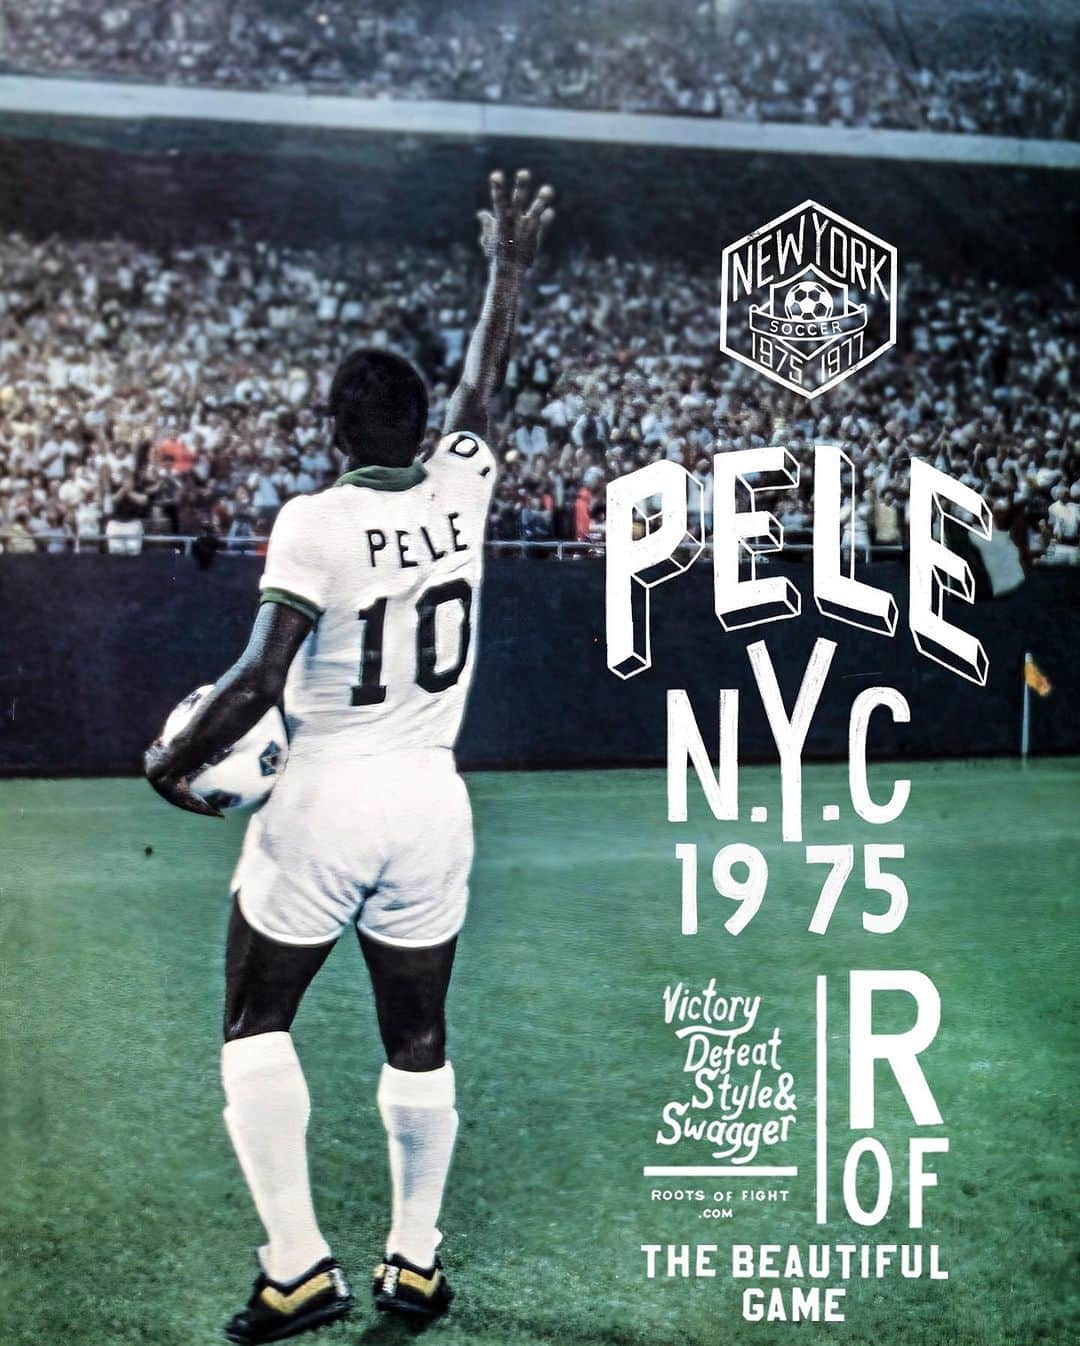 ペレのインスタグラム：「11 de junho de 1975, Manhattan. O grande Pelé do Brasil – o jogador de futebol mais célebre do mundo, bem como a figura mais mitológica – assinou o maior contrato da história dos esportes coletivos quando concordou em ingressar no New York Cosmos.  Na América, foi um acontecimento cultural. Mais de 200 repórteres apareceram para ter uma visão da grandeza. Ninguém percebeu na época, mas quando Pelé estreou, quatro dias depois, ele abriu as portas para o esporte nos EUA.  @rootsoffight está relembrando 1975, ano em que Pelé chegou à Big Apple, com esta nova coleção Pelé x NYC - exclusivamente em pele10.org /rootsoffight.com.  #RootsofFight #KnowYourRoots .  June 11, 1975, Midtown Manhattan. Brasil’s great Pelé — the world’s most celebrated soccer player, as well as its most mythological figure — signed the biggest contract in team sports history when he agreed to join the New York Cosmos.  In America, it was a cultural happening. Over 200 reporters showed up at the Hunt Room within the “21” Club to get an eyeful of greatness. Nobody realized it at the time, but when Pelé debuted four days later he opened the floodgates for the sport in the U.S.   @rootsoffight is throwing back to 1975, the year Pelé hit the Big Apple, with this new Pelé x NYC capsule - exclusively at pele10.org / rootsoffight.com.  #RootsofFight #KnowYourRoots」